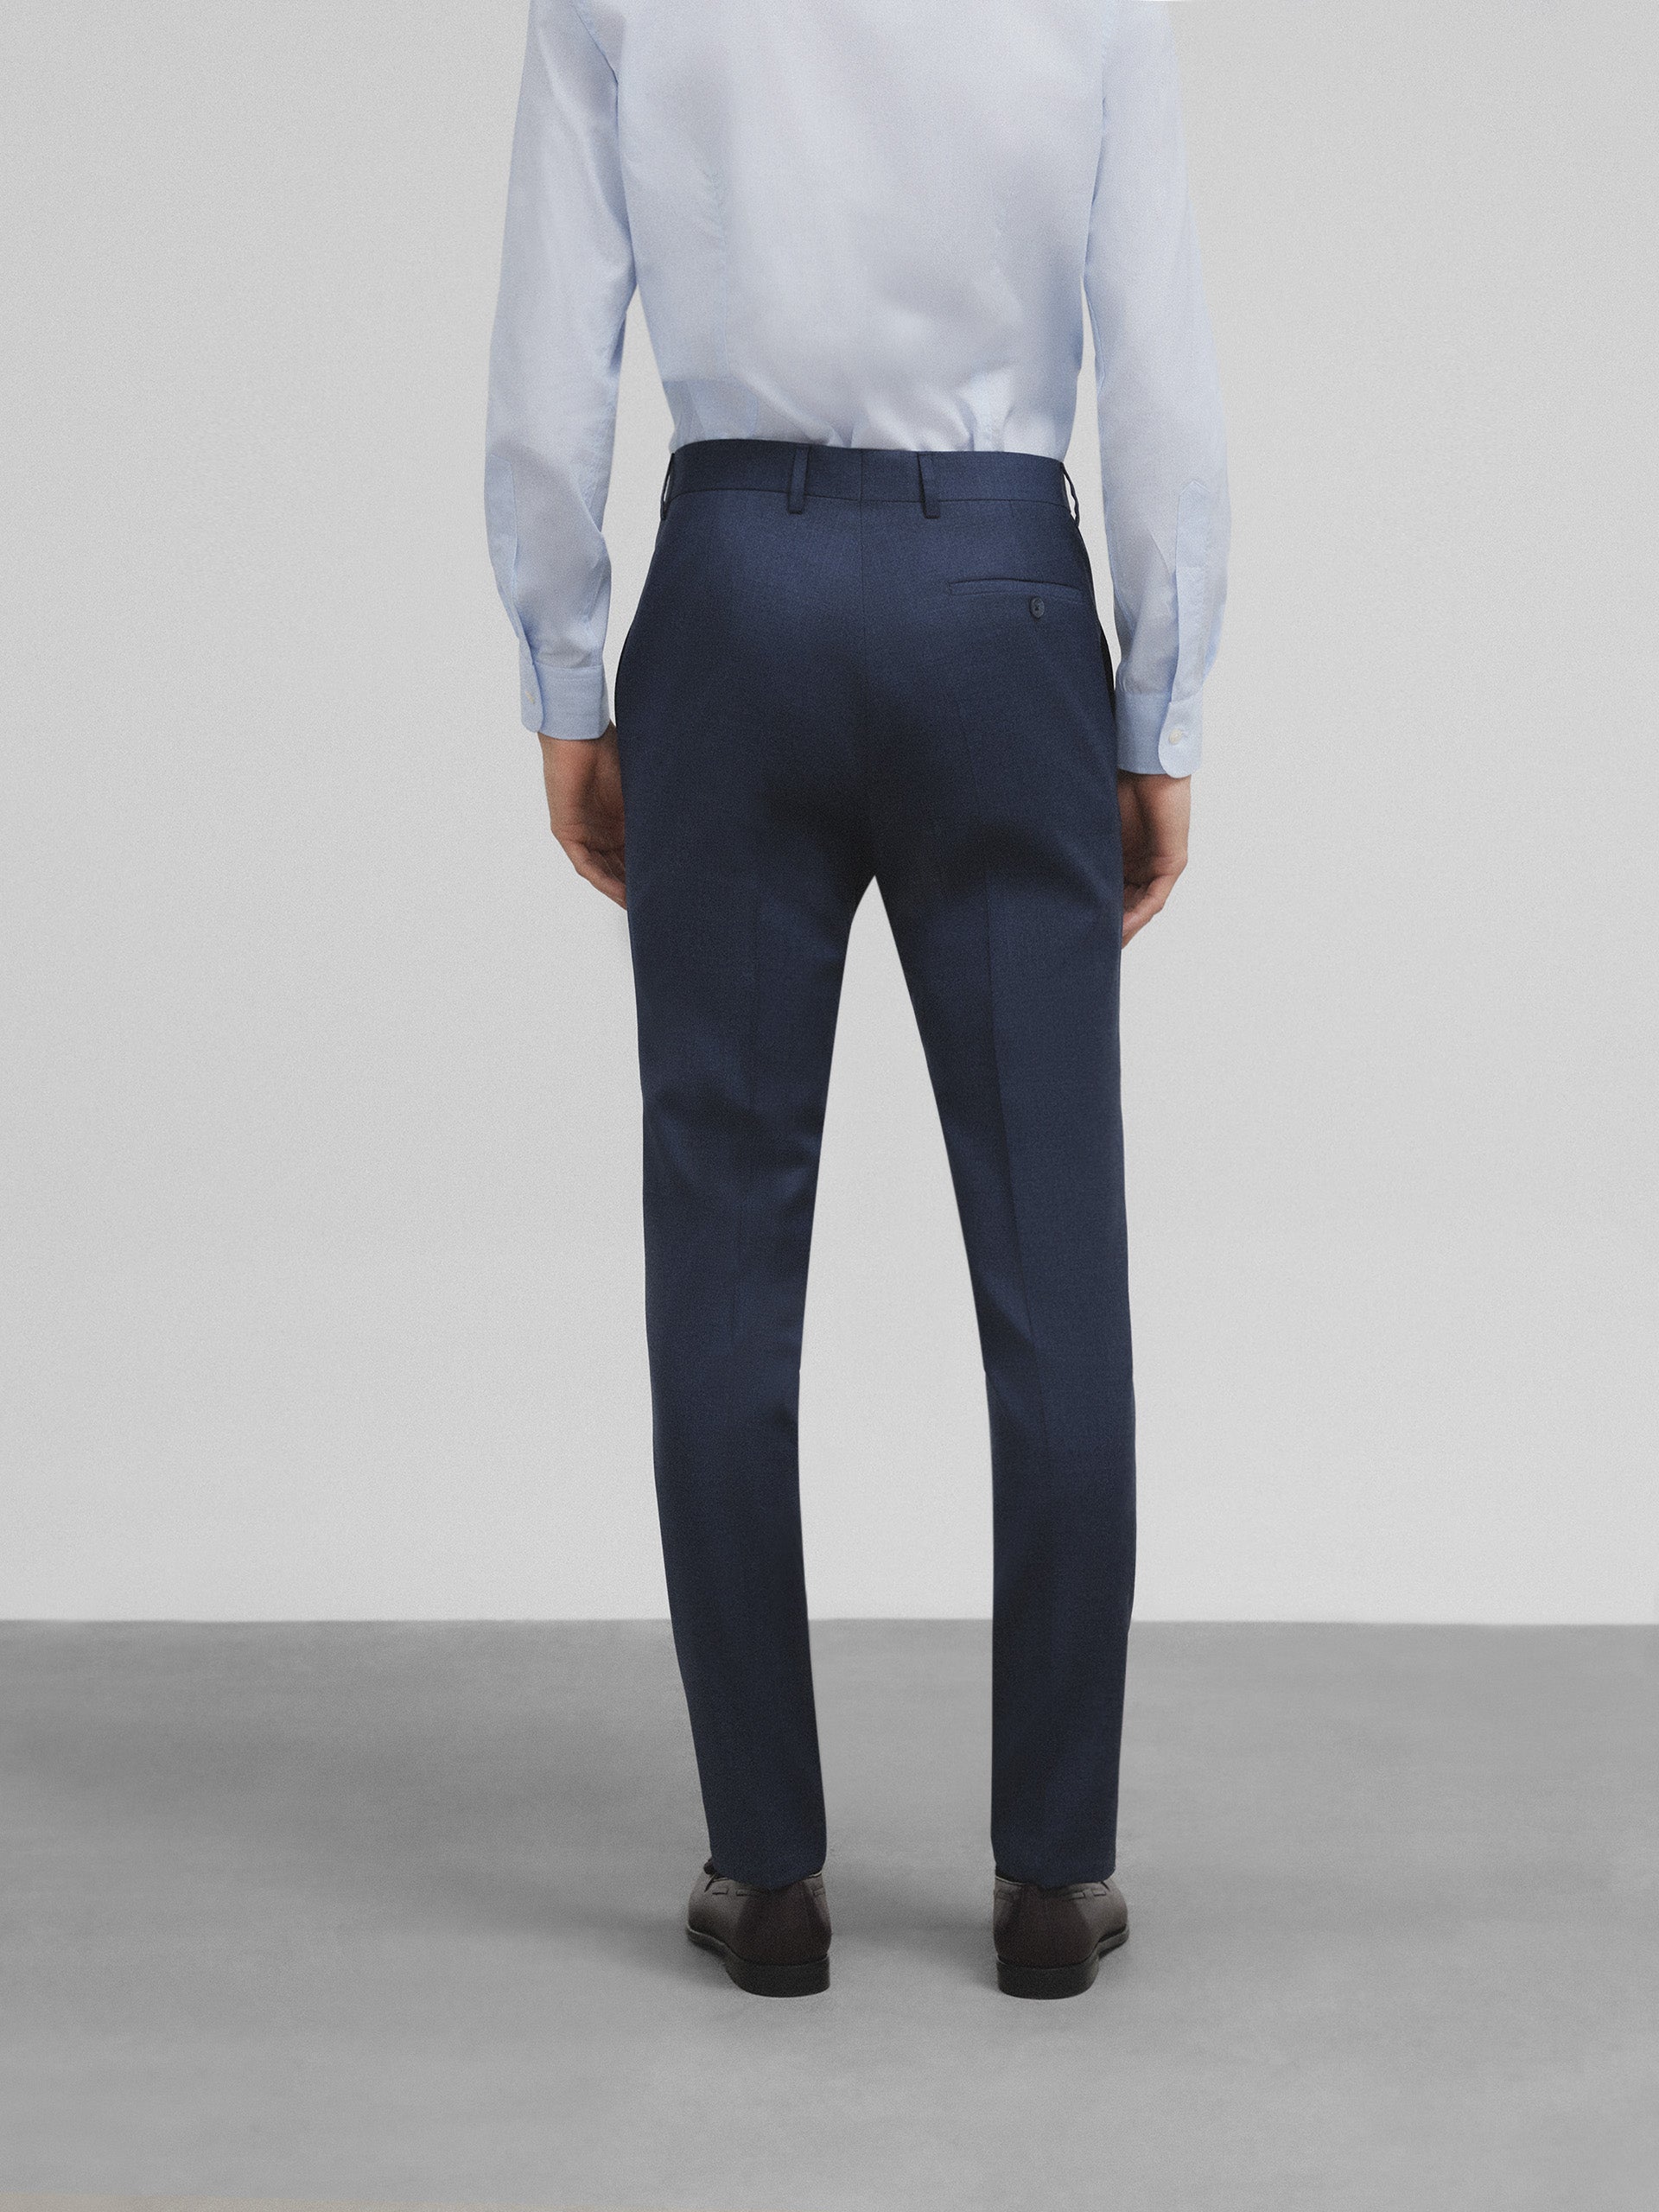 Pantalon traje fil a fil azul